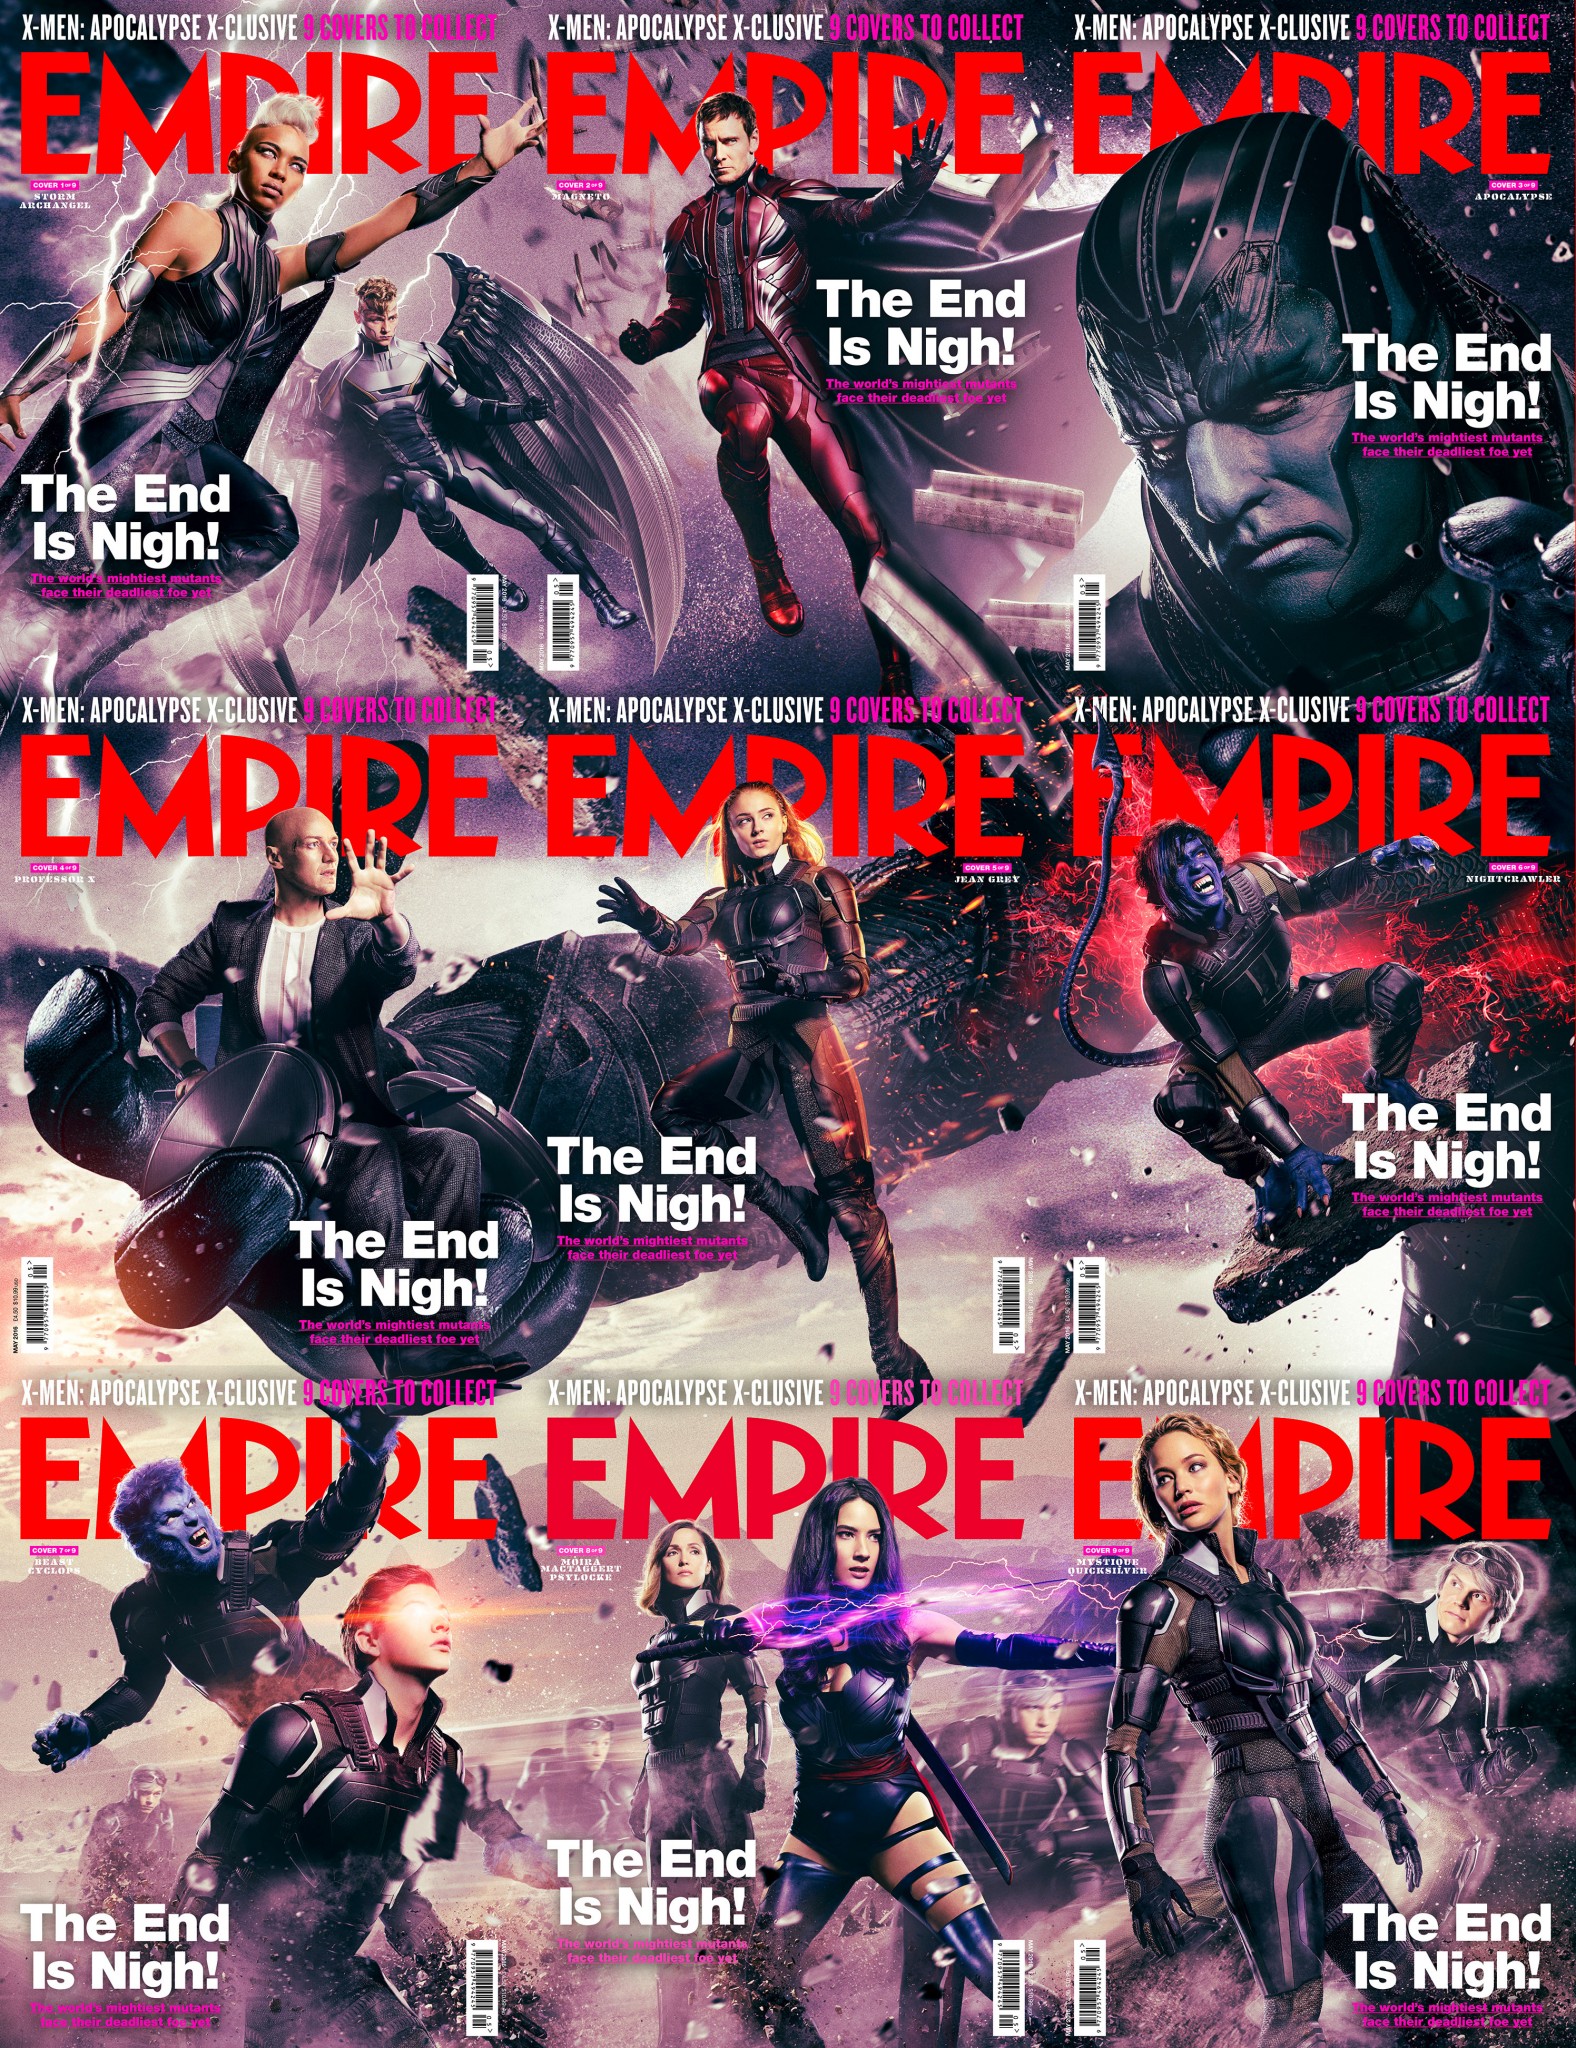 x-men-apocalypse-empire-covers-full-pic